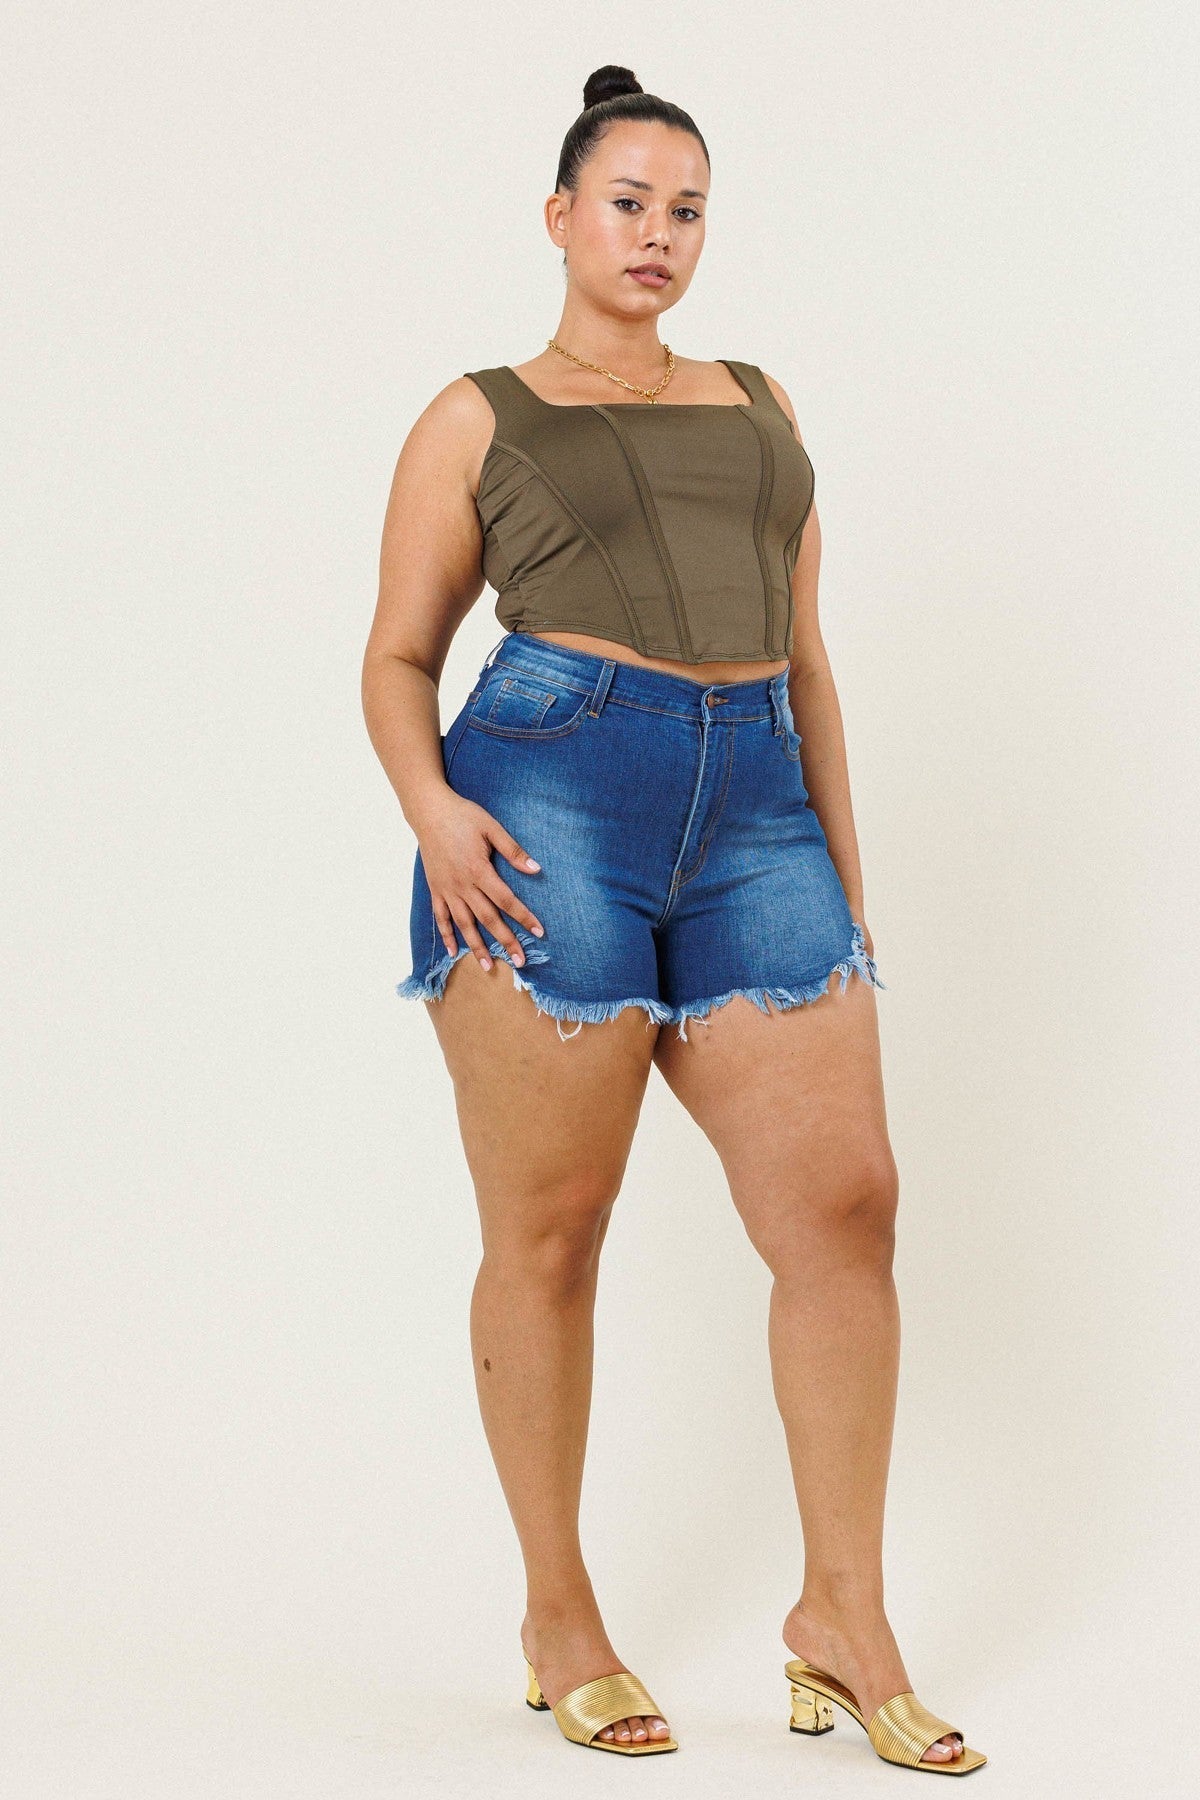 Plus Size Women Clothing Multi Layer Frayed Denim Shorts Color